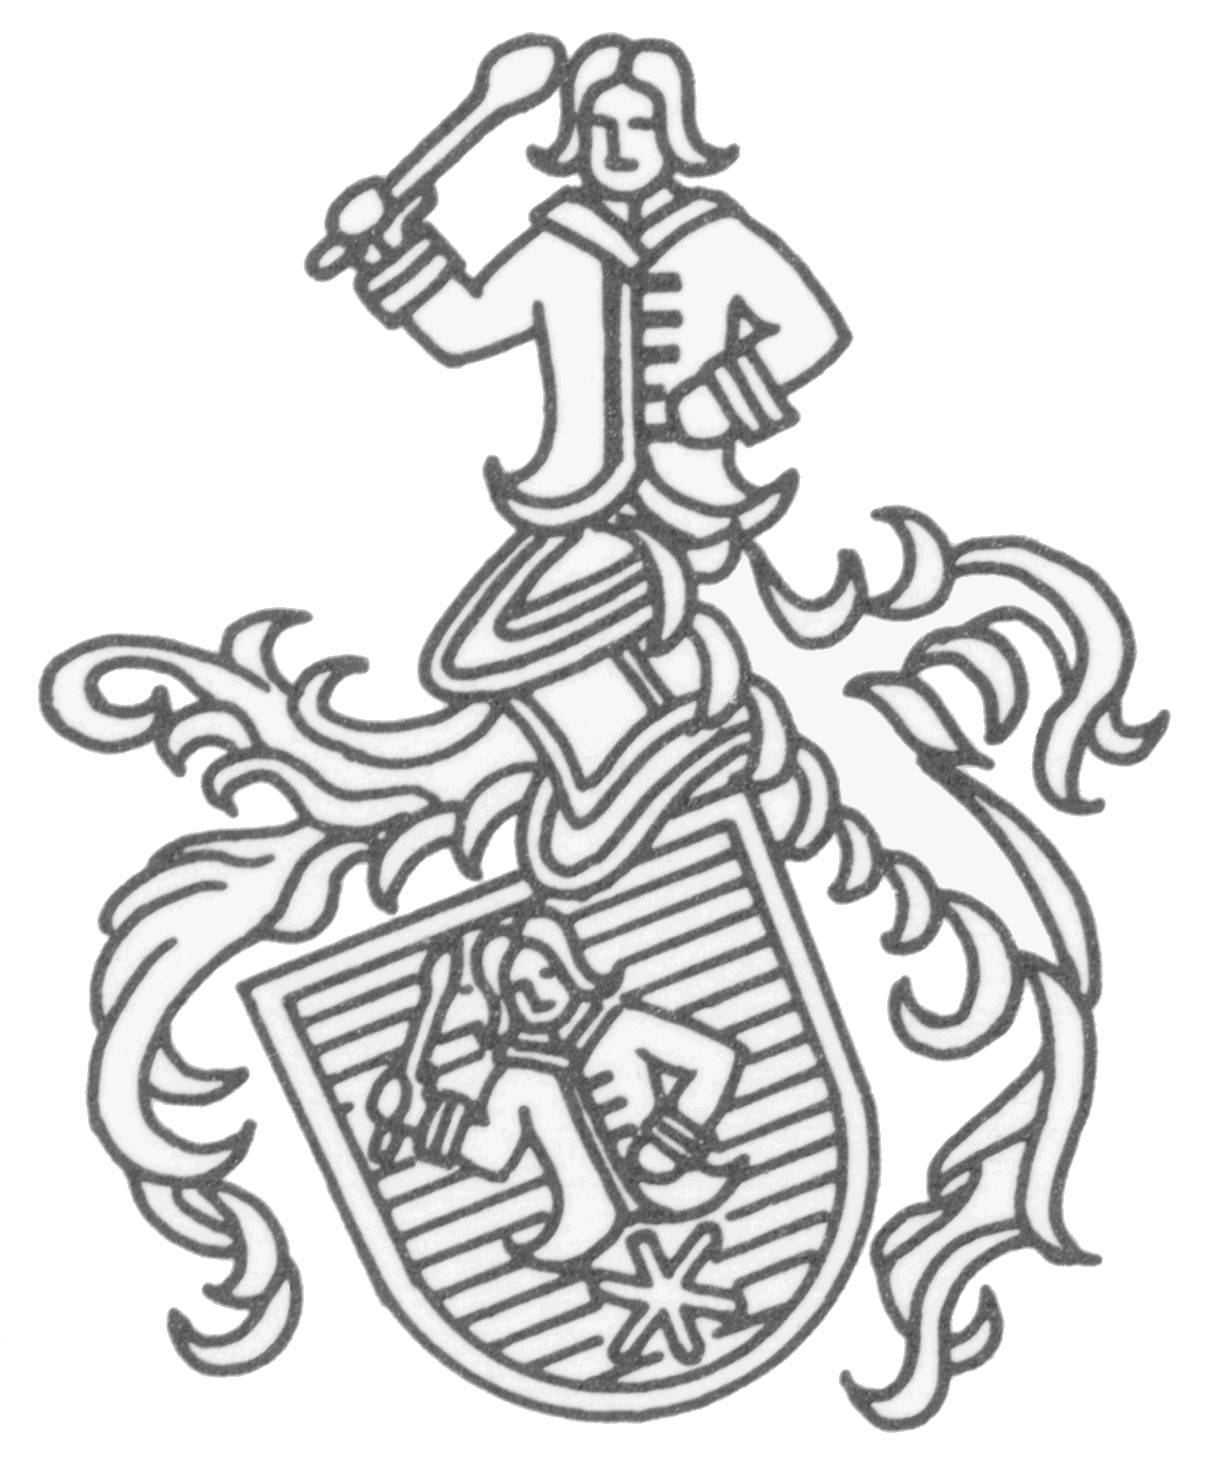 Loepelmann coat of arms